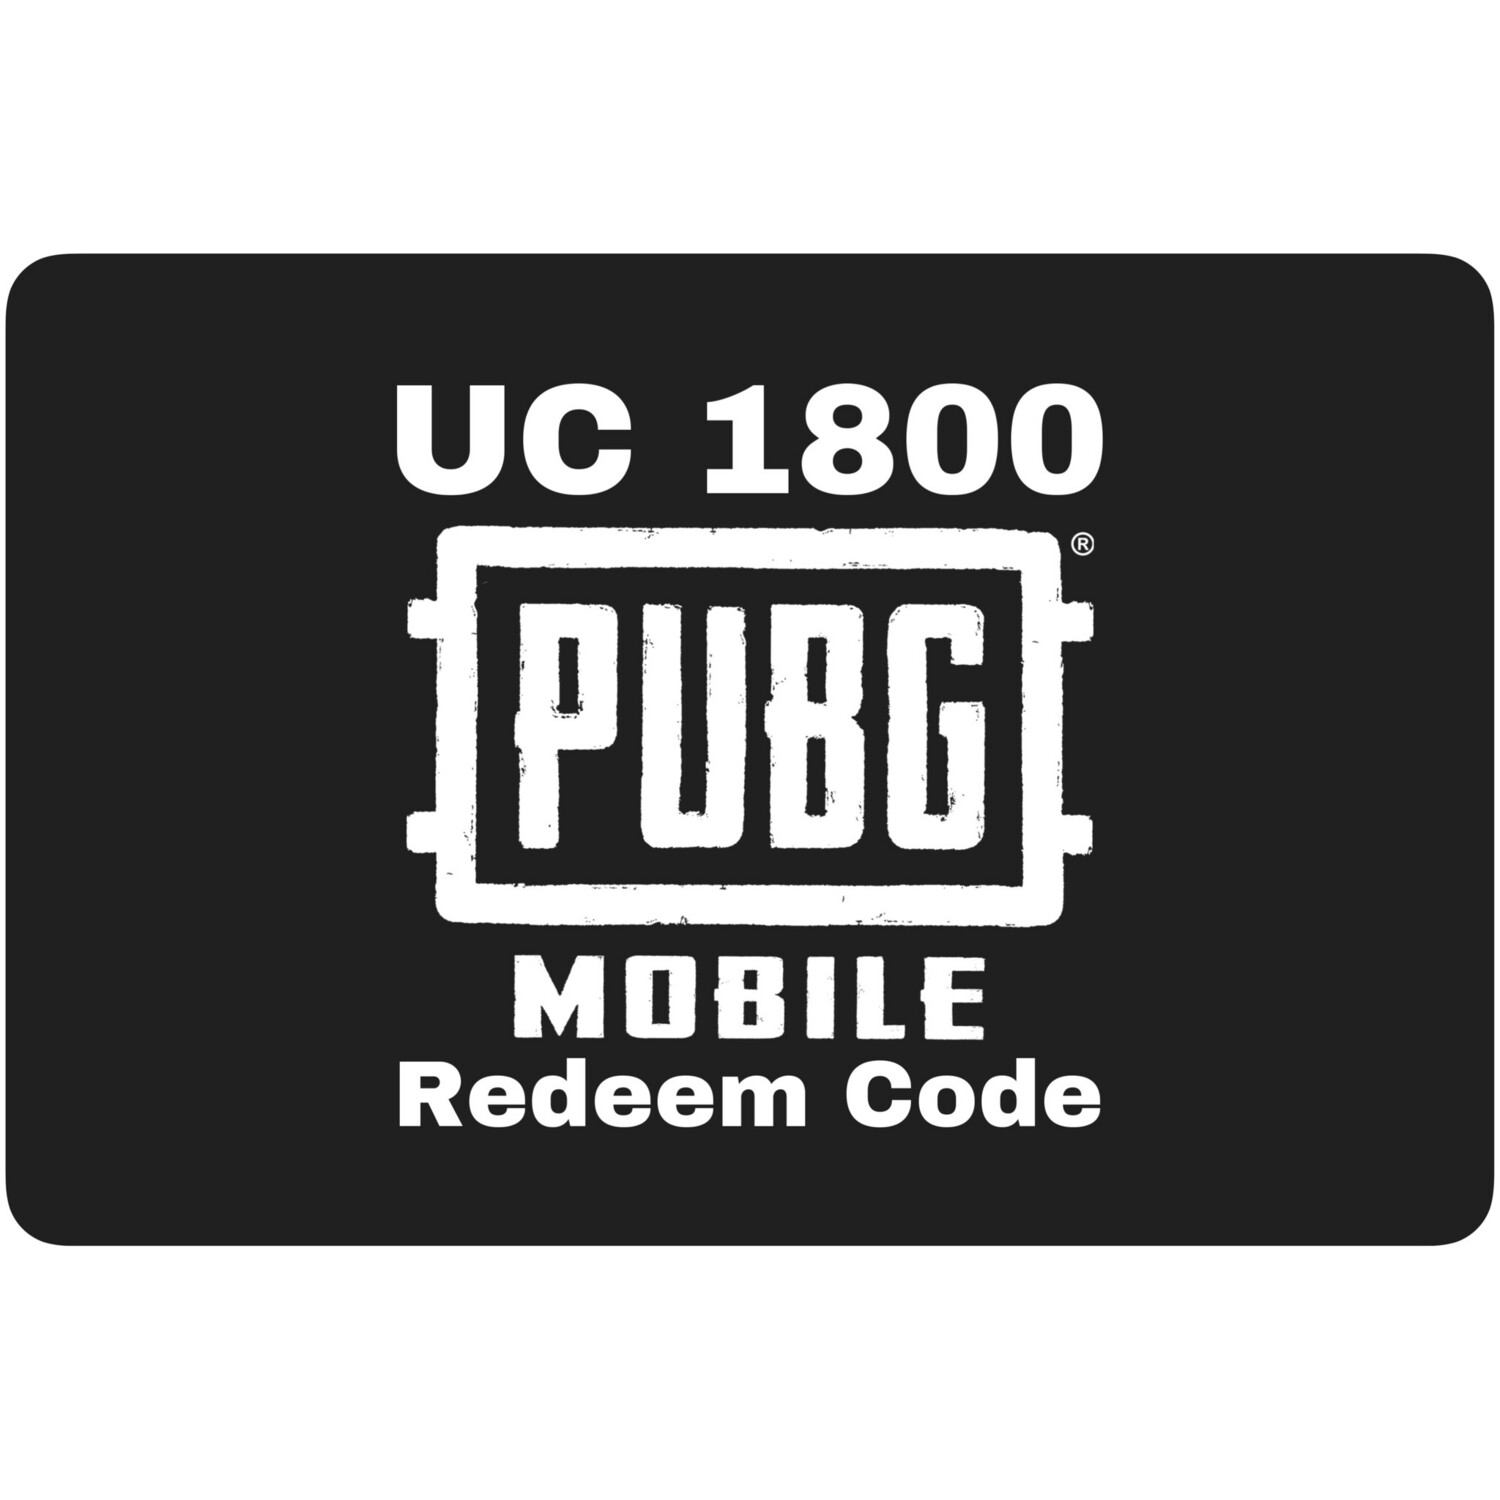 PUBG Mobile UC 1800 Redeem Code Global Voucher